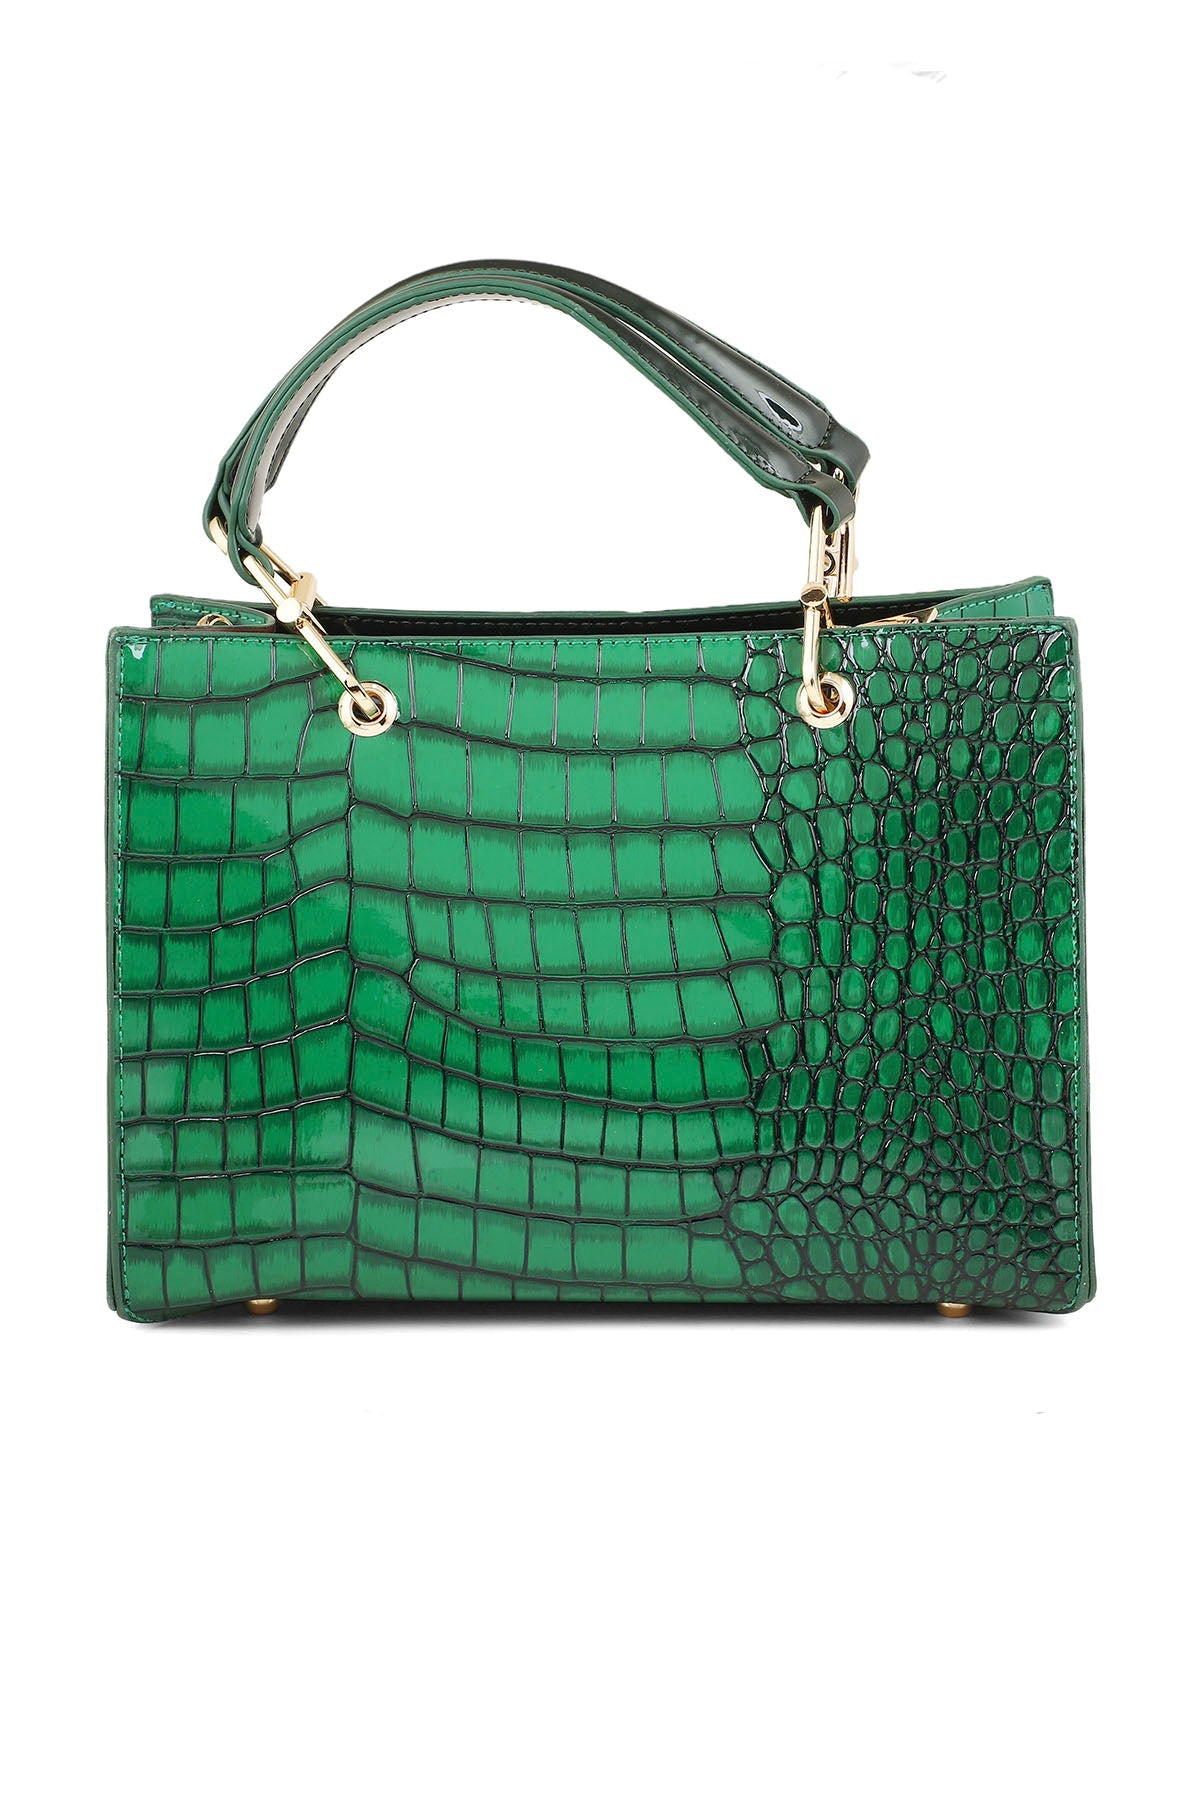 Formal Tote Hand Bags B15100-Green